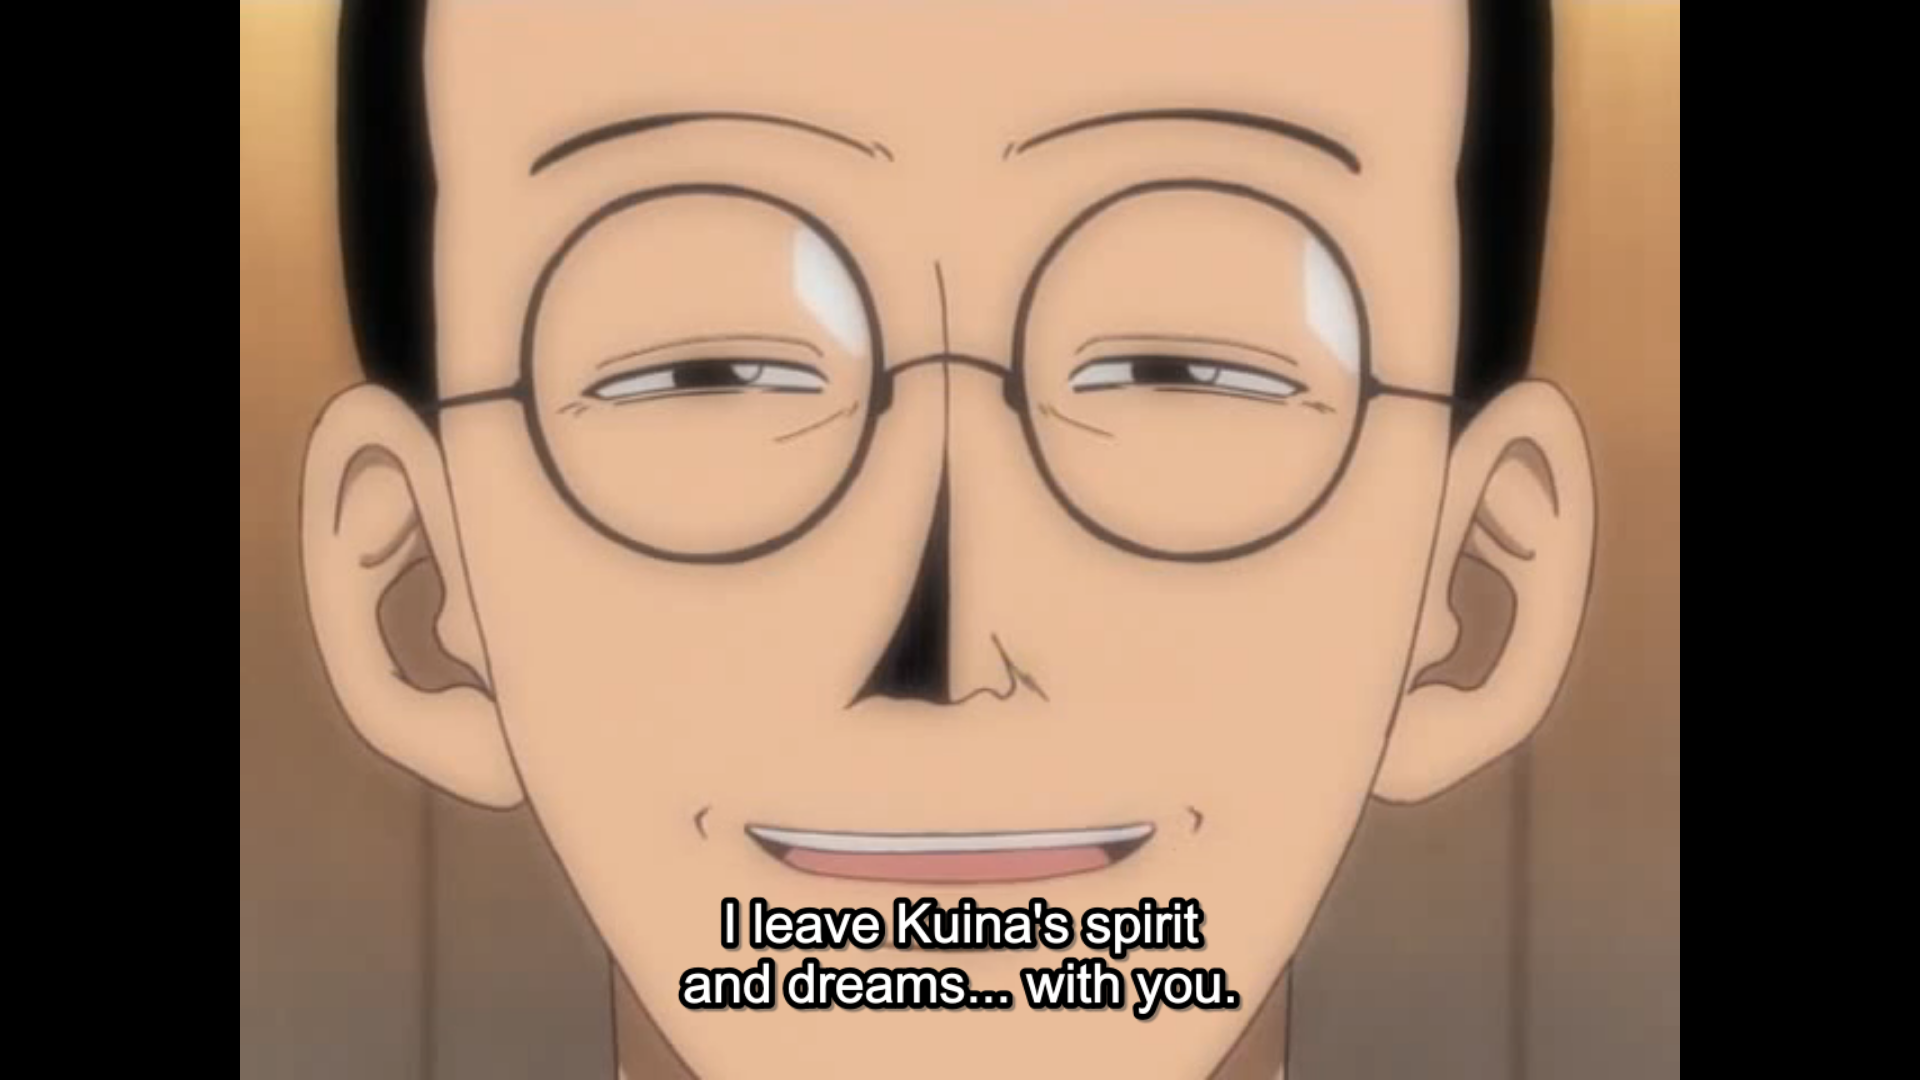 Do yall think Shimotsuki Ushimaru is Roronoa Zoro's biological father?